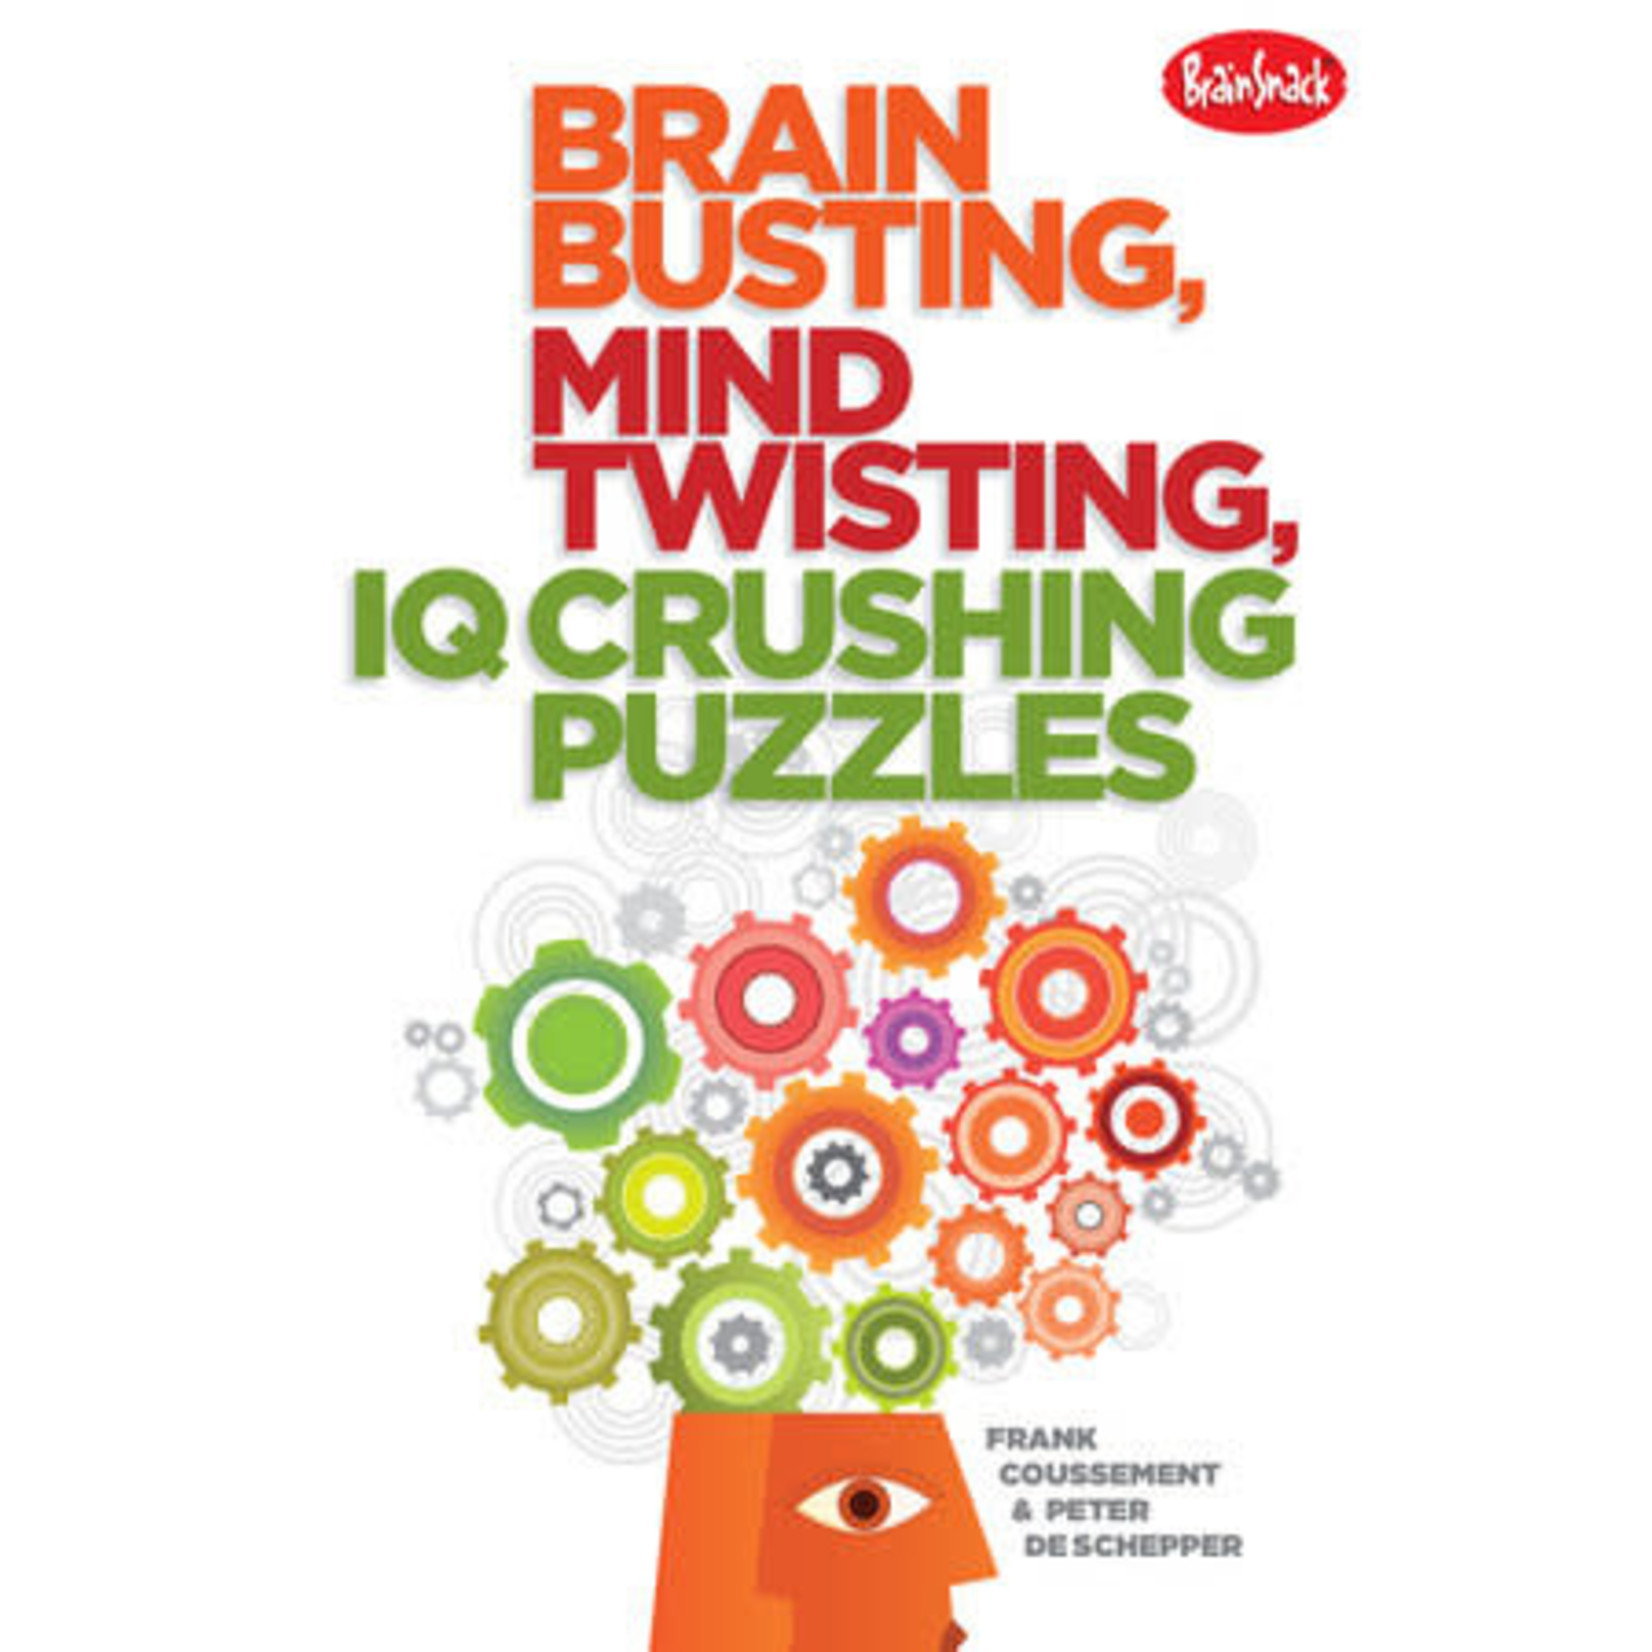 Brain Snack Brain Busting, Mind Twisting, IQ Crushing Puzzles